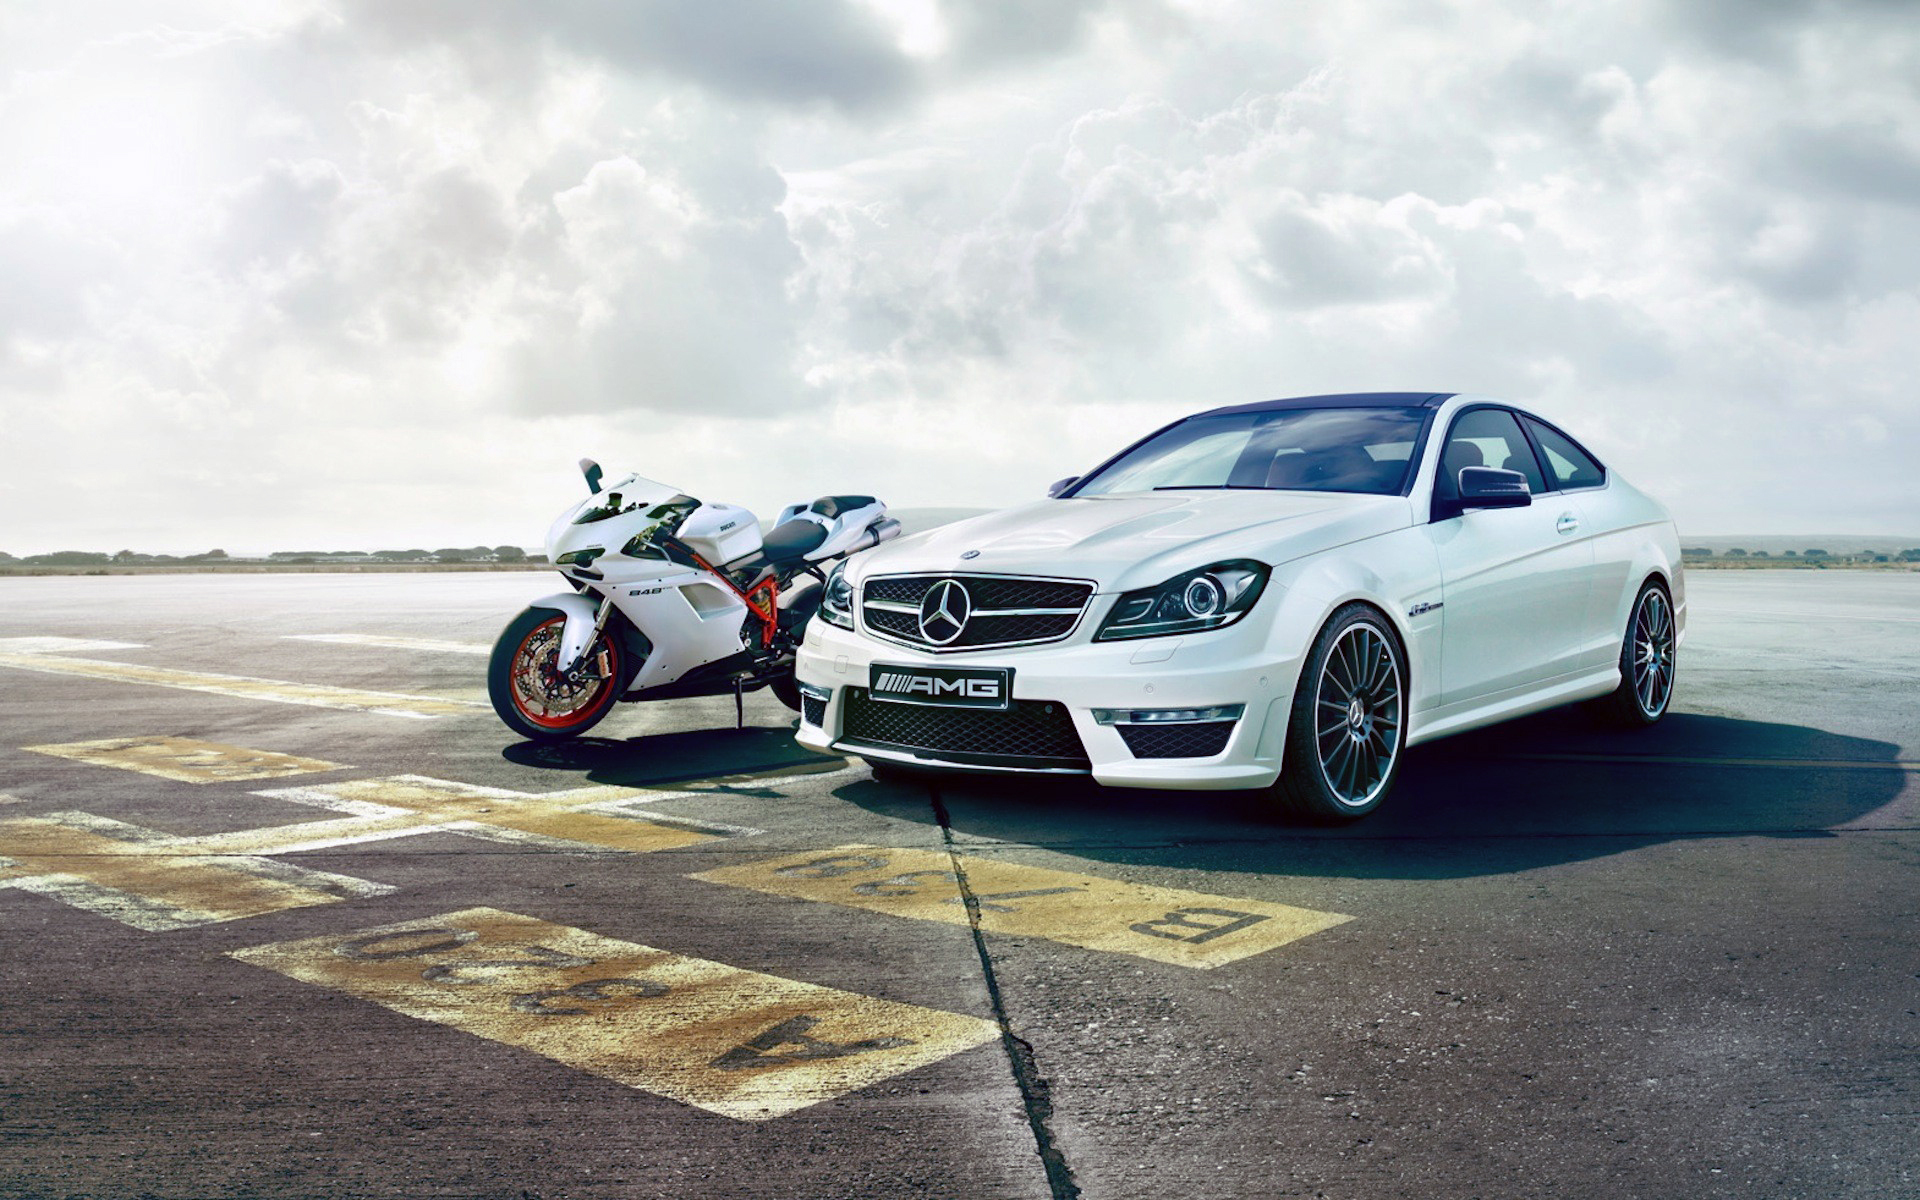 White Mercedes Amg And Ducati Photograph - Carro E Moto , HD Wallpaper & Backgrounds